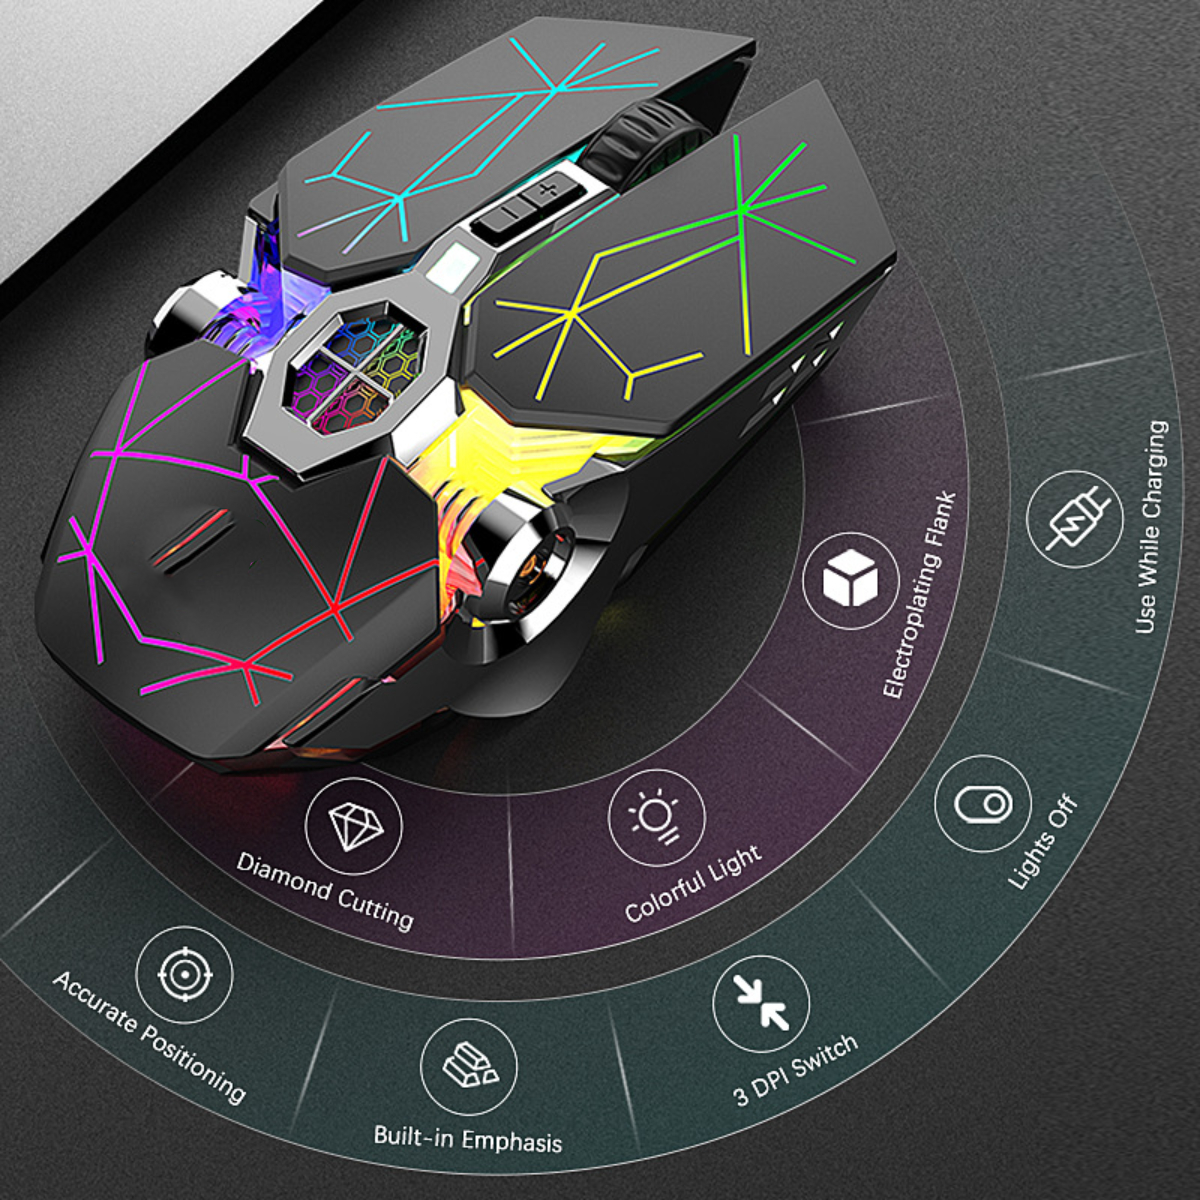 mechanische wassergekühlte Maus Gaming Rechargeable SYNTEK Maus, schwarz Maus Mouse beleuchtete Wireless Stille